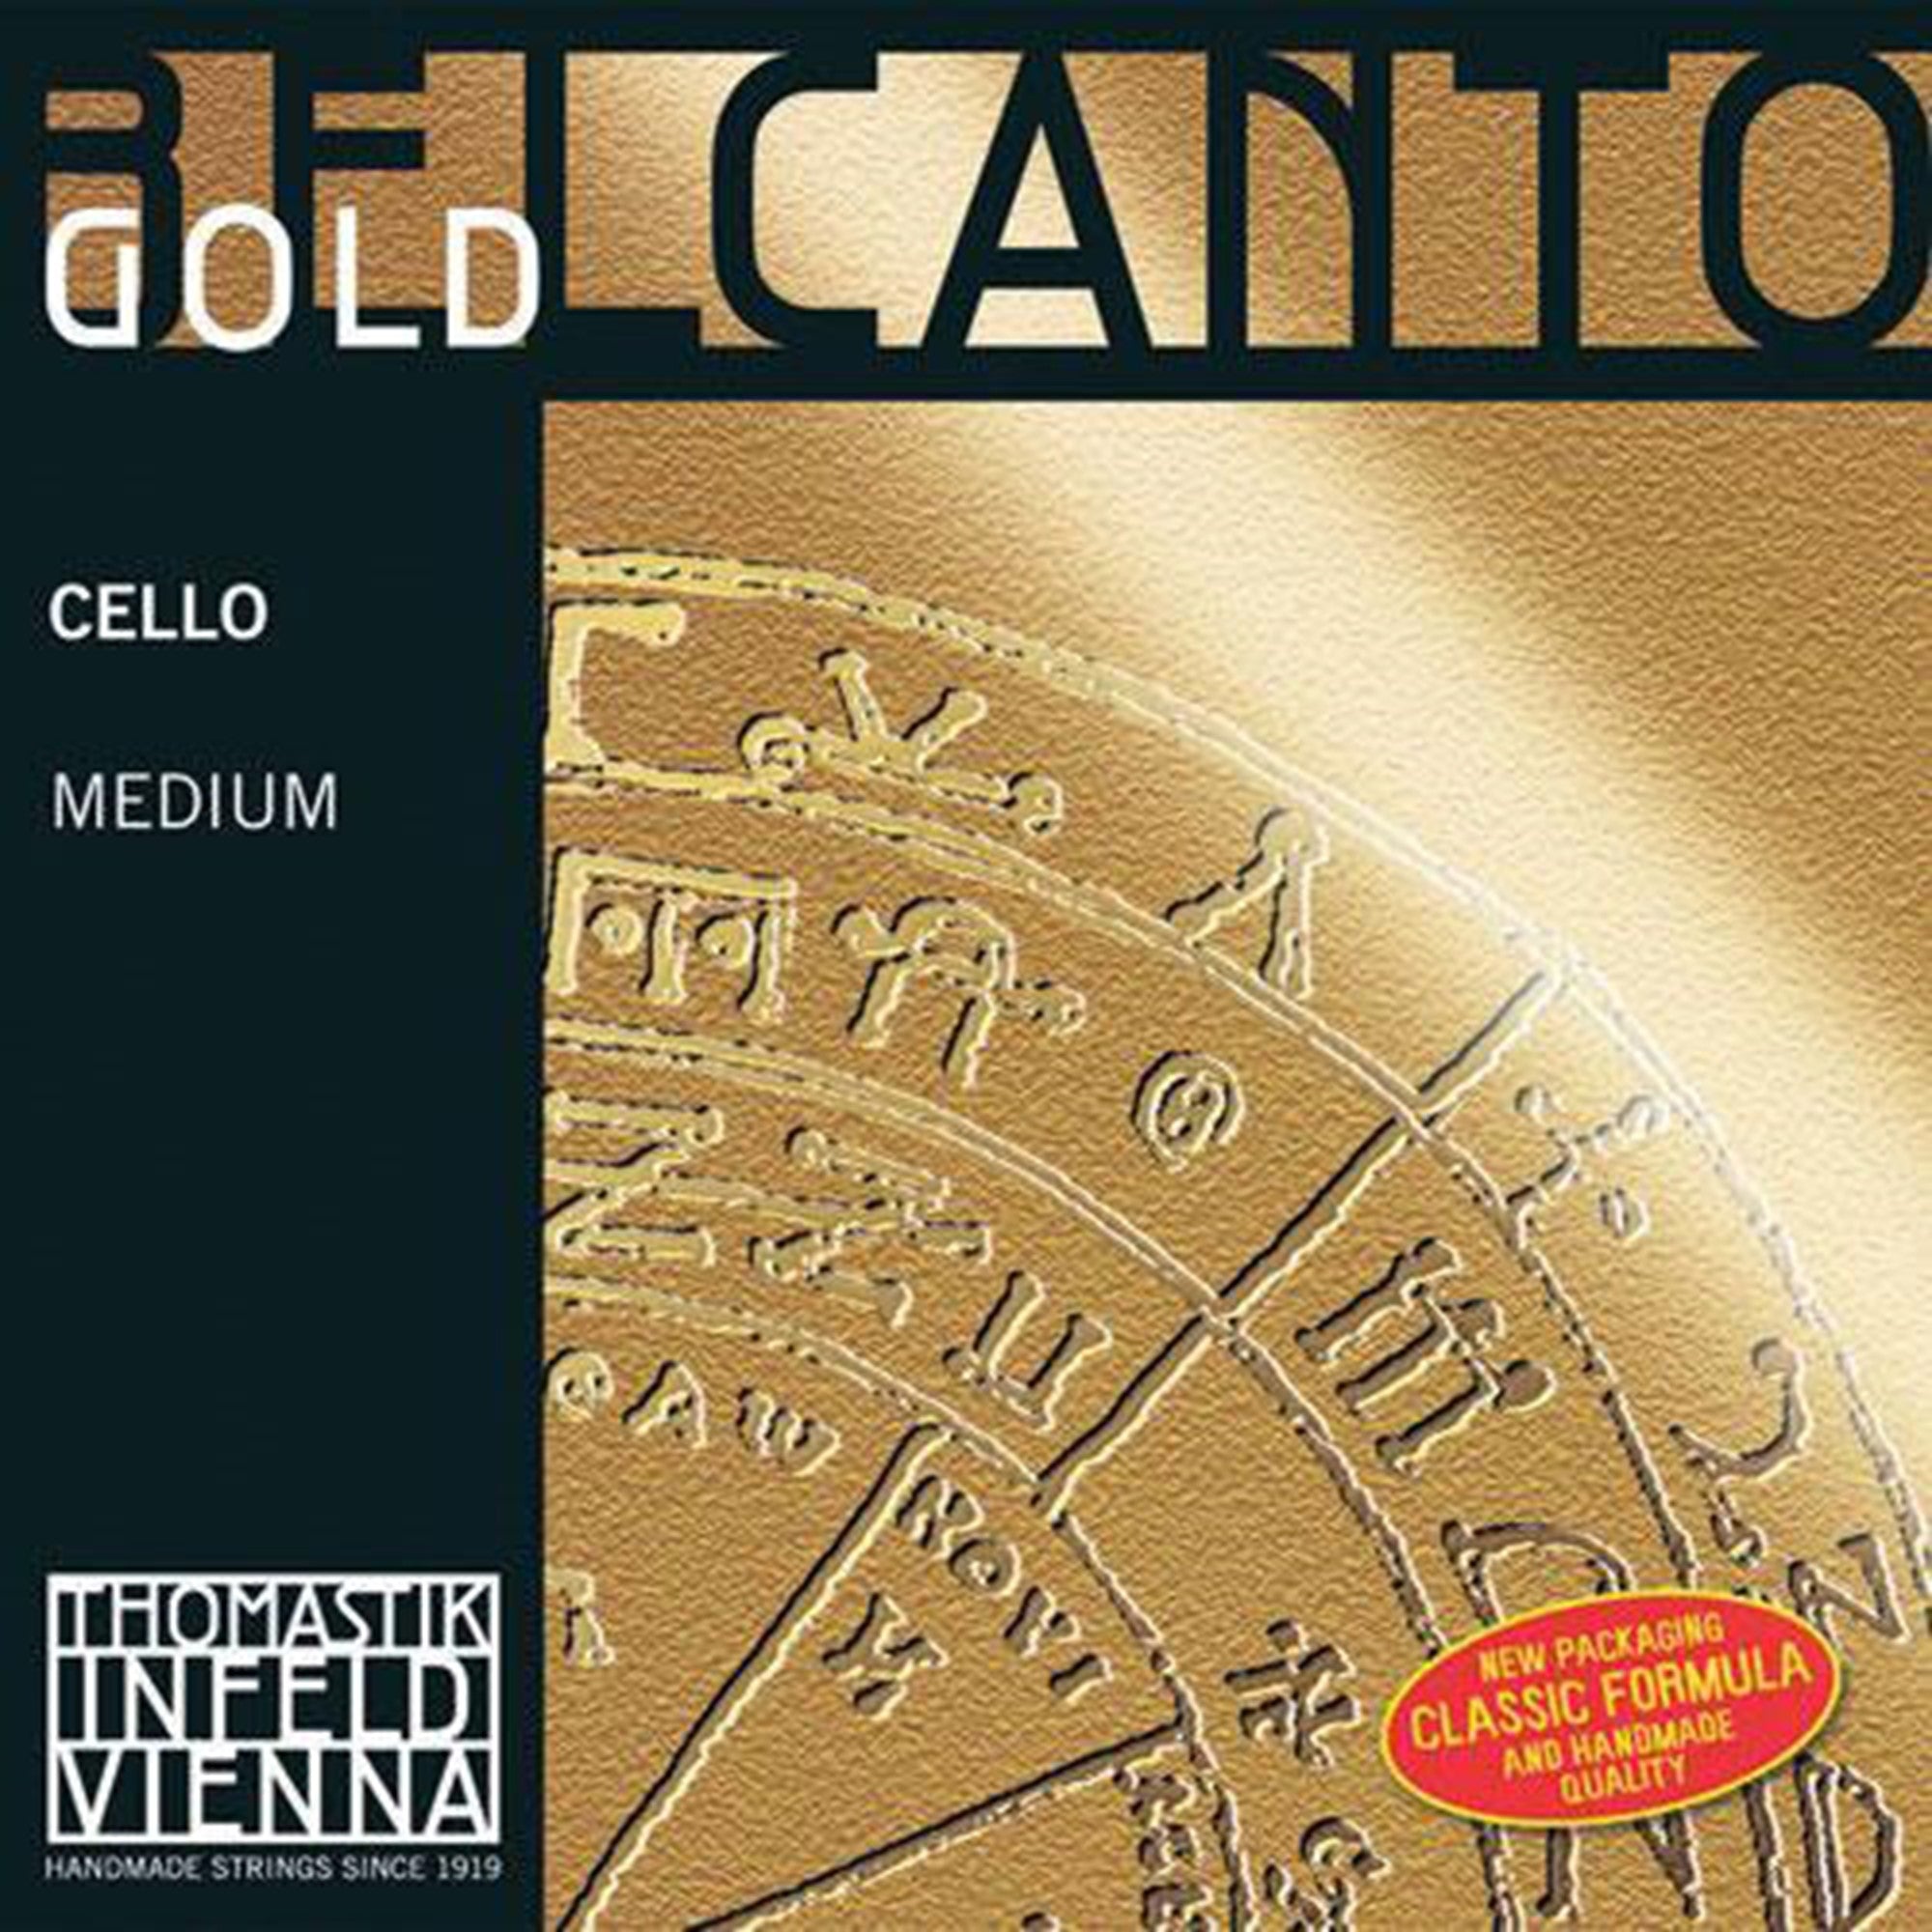 Thomastik Belcanto Gold Cello String Set